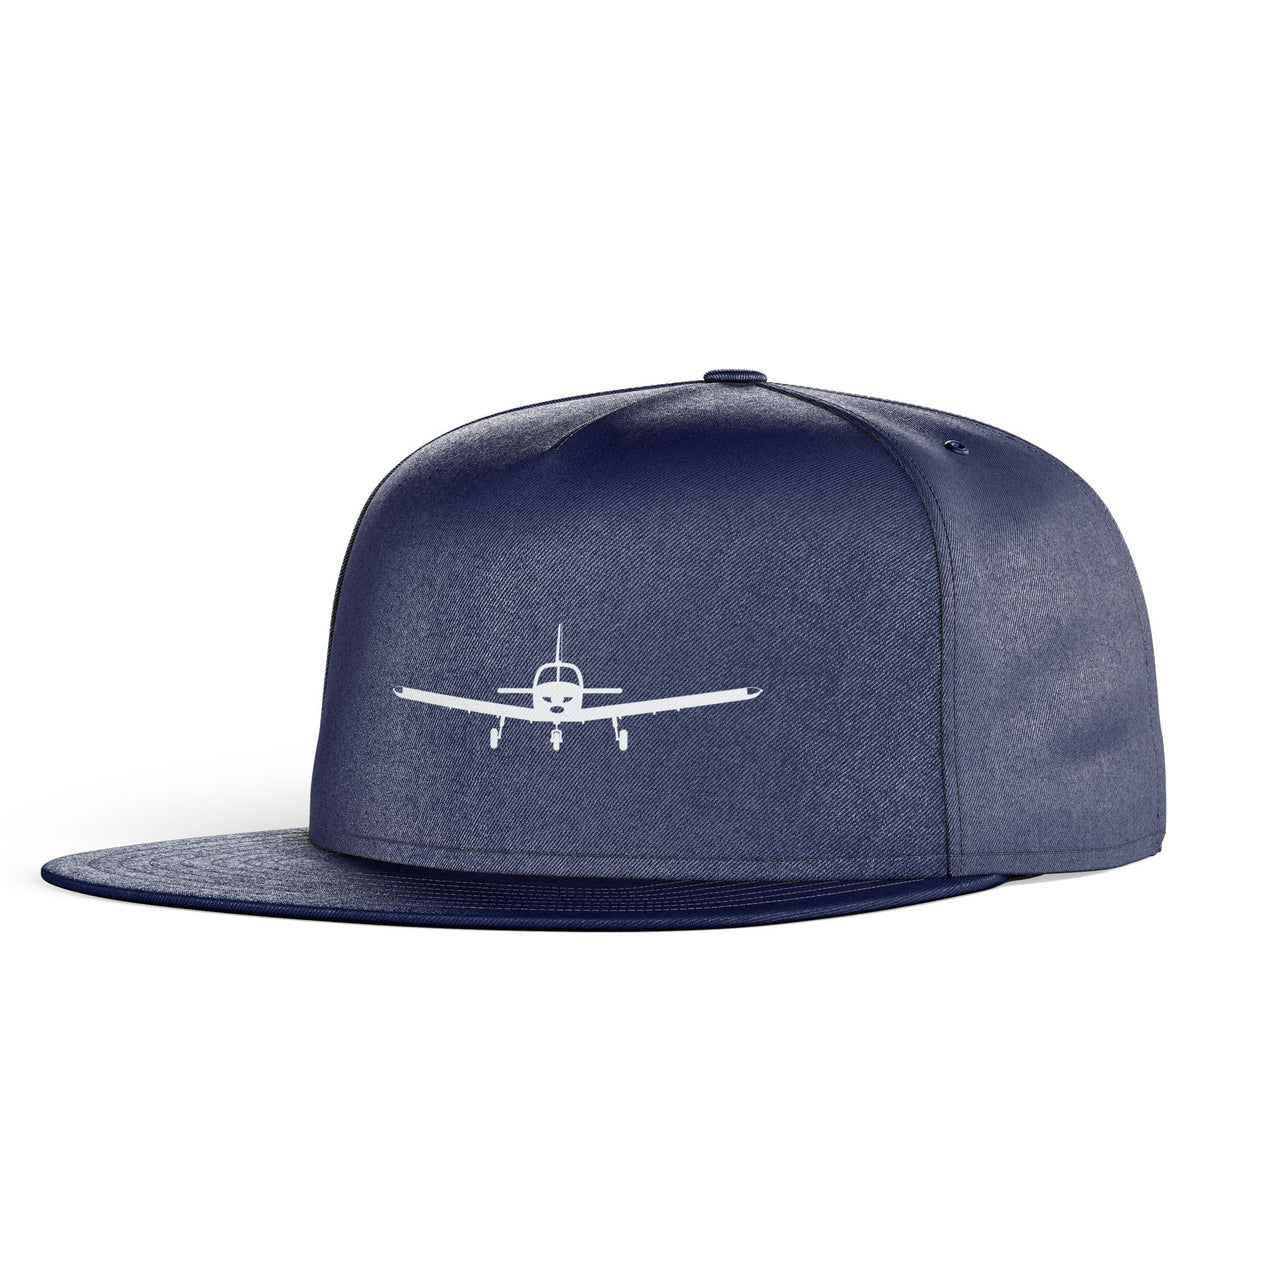 Piper PA28 Silhouette Plane Designed Snapback Caps & Hats